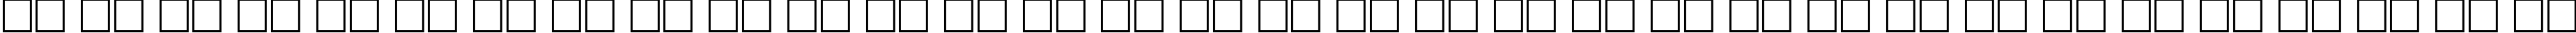 Пример написания русского алфавита шрифтом NTHarmonica Bold80b